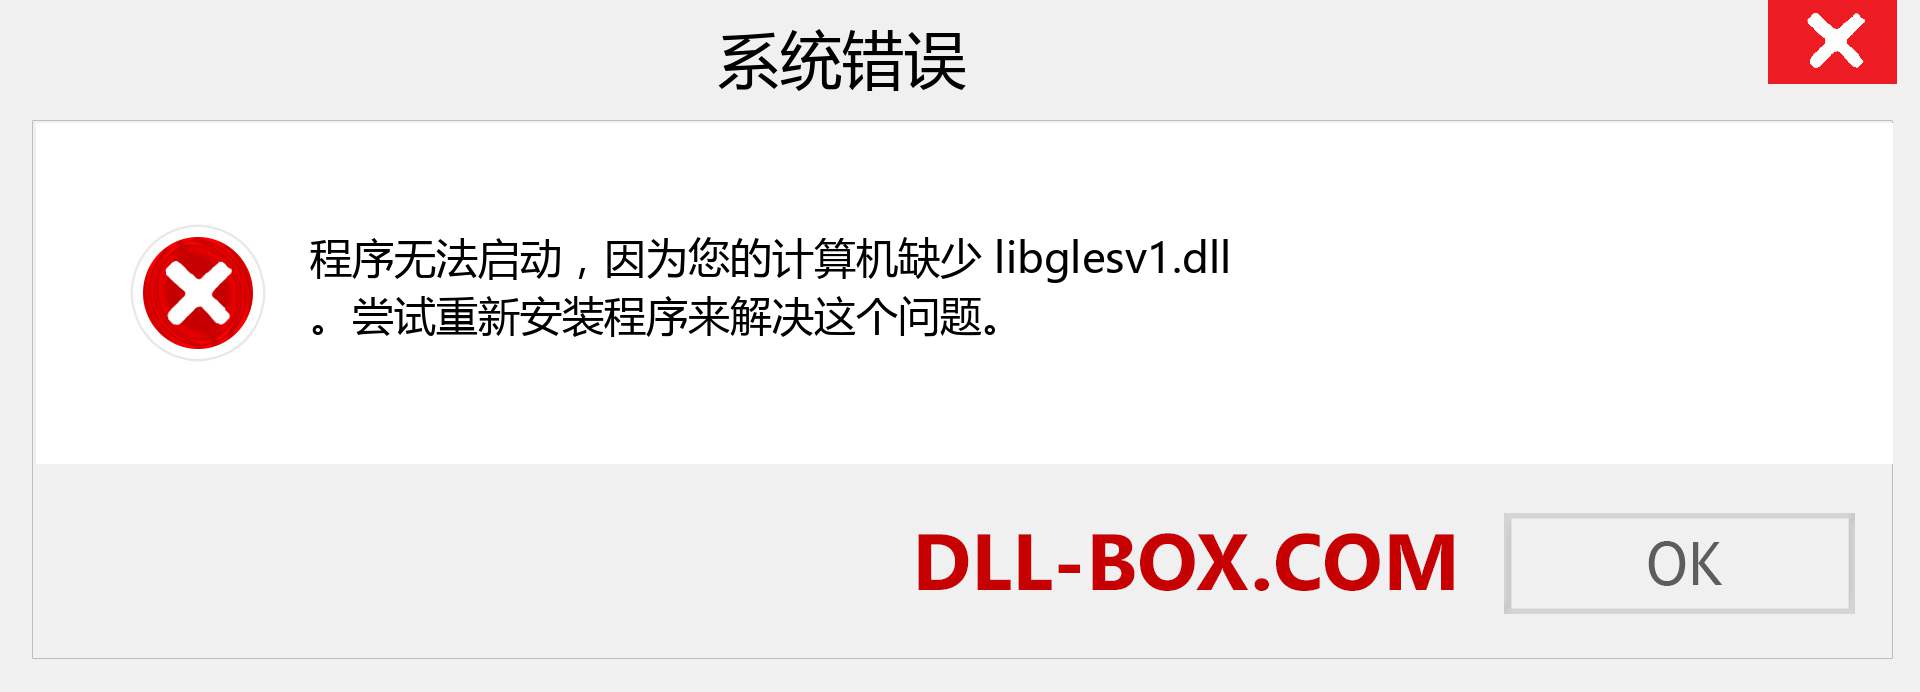 libglesv1.dll 文件丢失？。 适用于 Windows 7、8、10 的下载 - 修复 Windows、照片、图像上的 libglesv1 dll 丢失错误